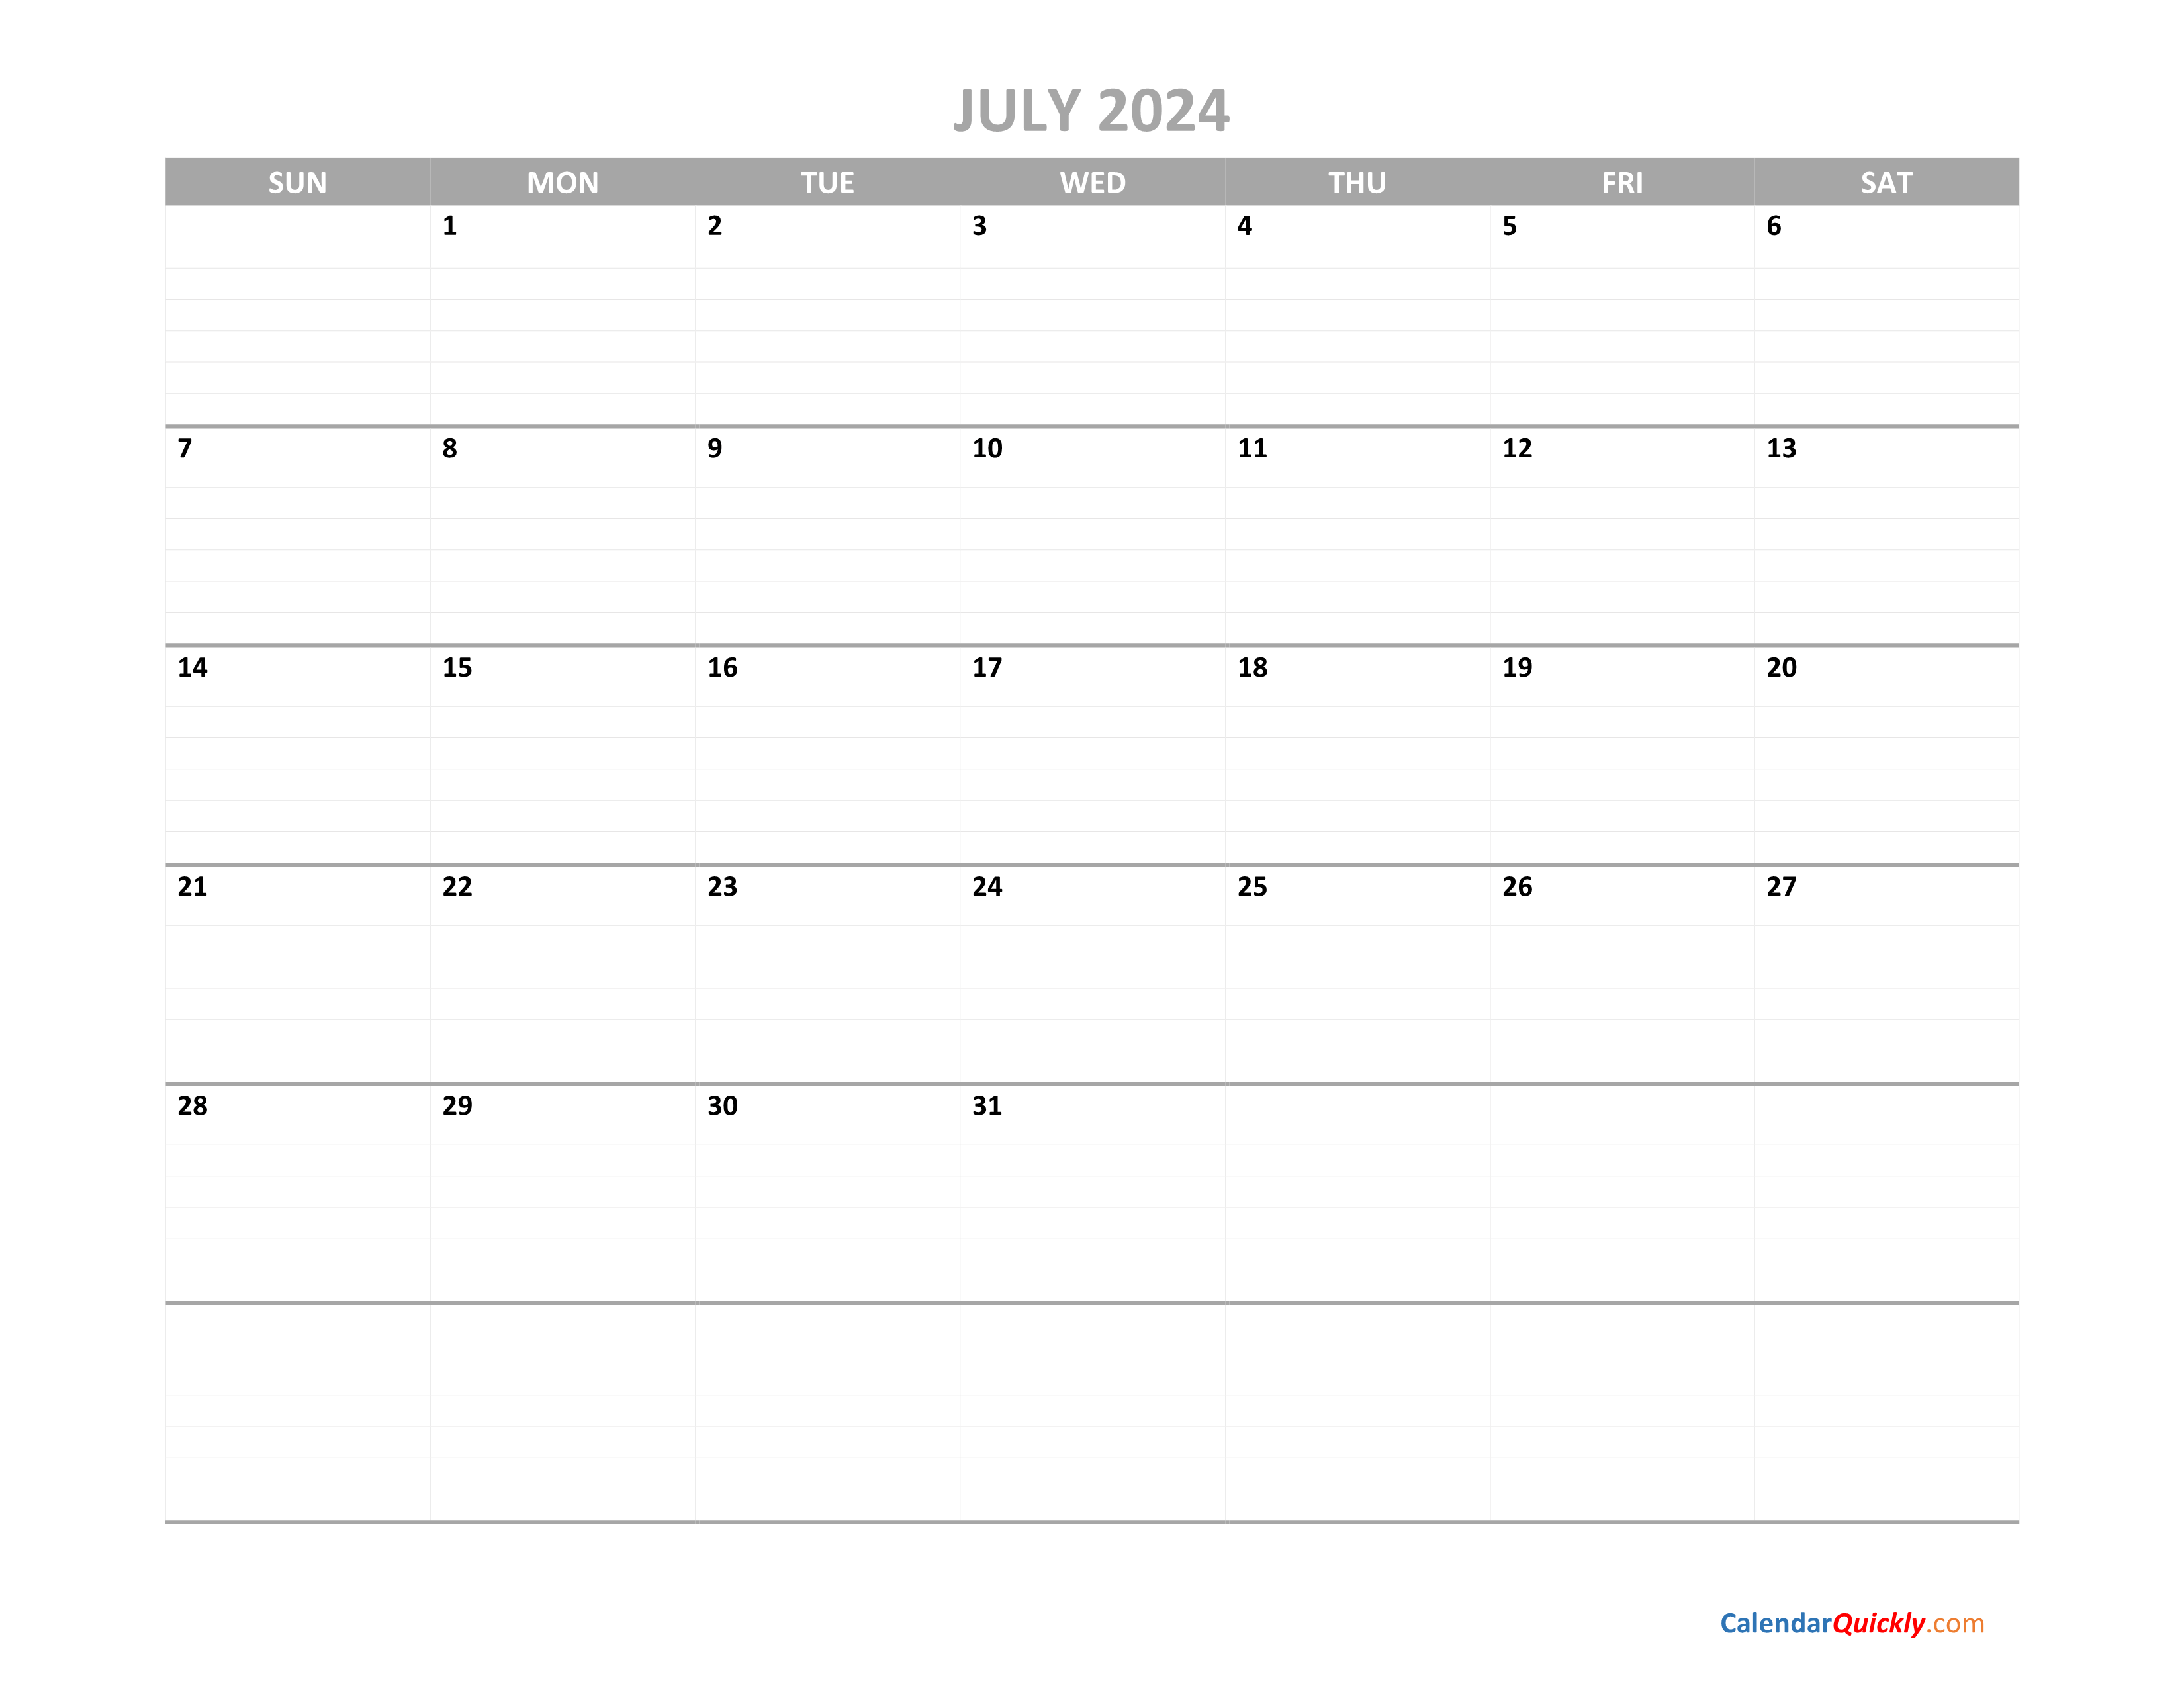 fiscal-year-calendar-july-2024-to-june-2024-calendar-2024-school-holidays-nsw